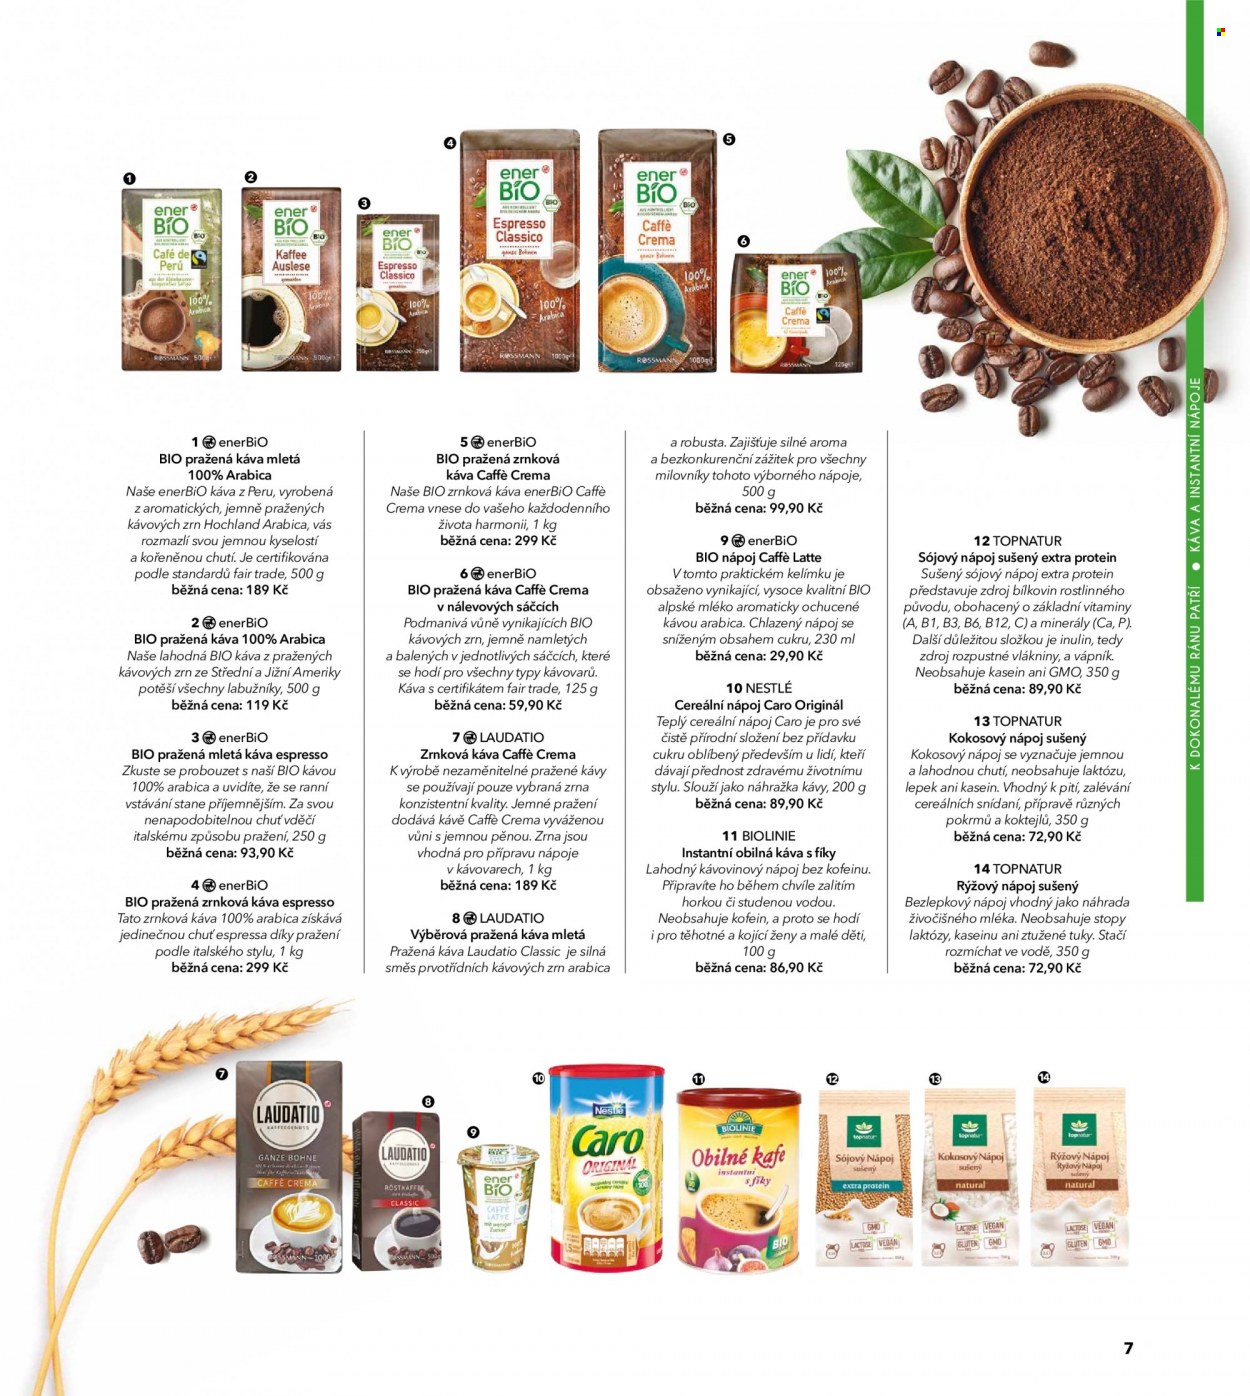 thumbnail - Leták ROSSMANN - Produkty v akci - Topnatur, mléko, sójový nápoj, enerBiO, Nestlé, cereální nápoj, ovocný nápoj, Caro, instantní nápoj, rýžové mléko, kokosový nápoj, Espresso, vápník, vitamin. Strana 9.